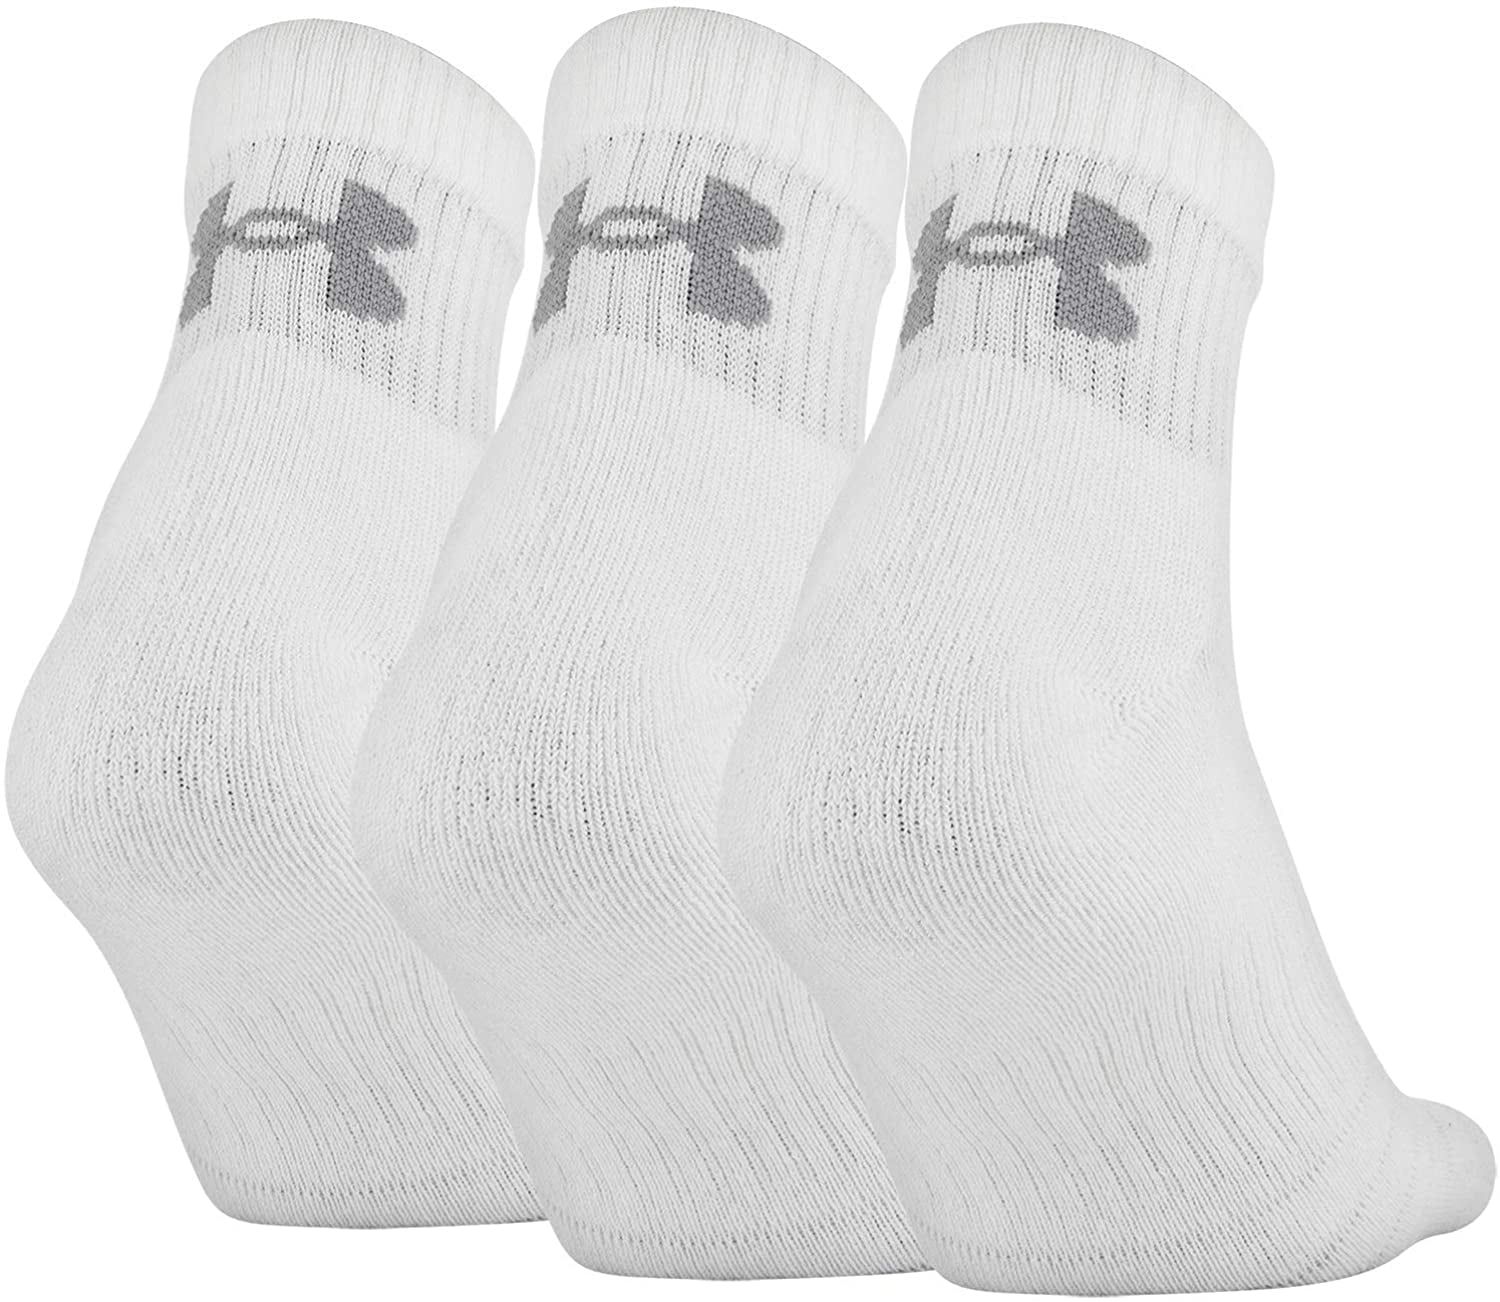 Under Armour Unisex Performance Cotton 3-Pack Quarter Socks  (White)-1379528-100